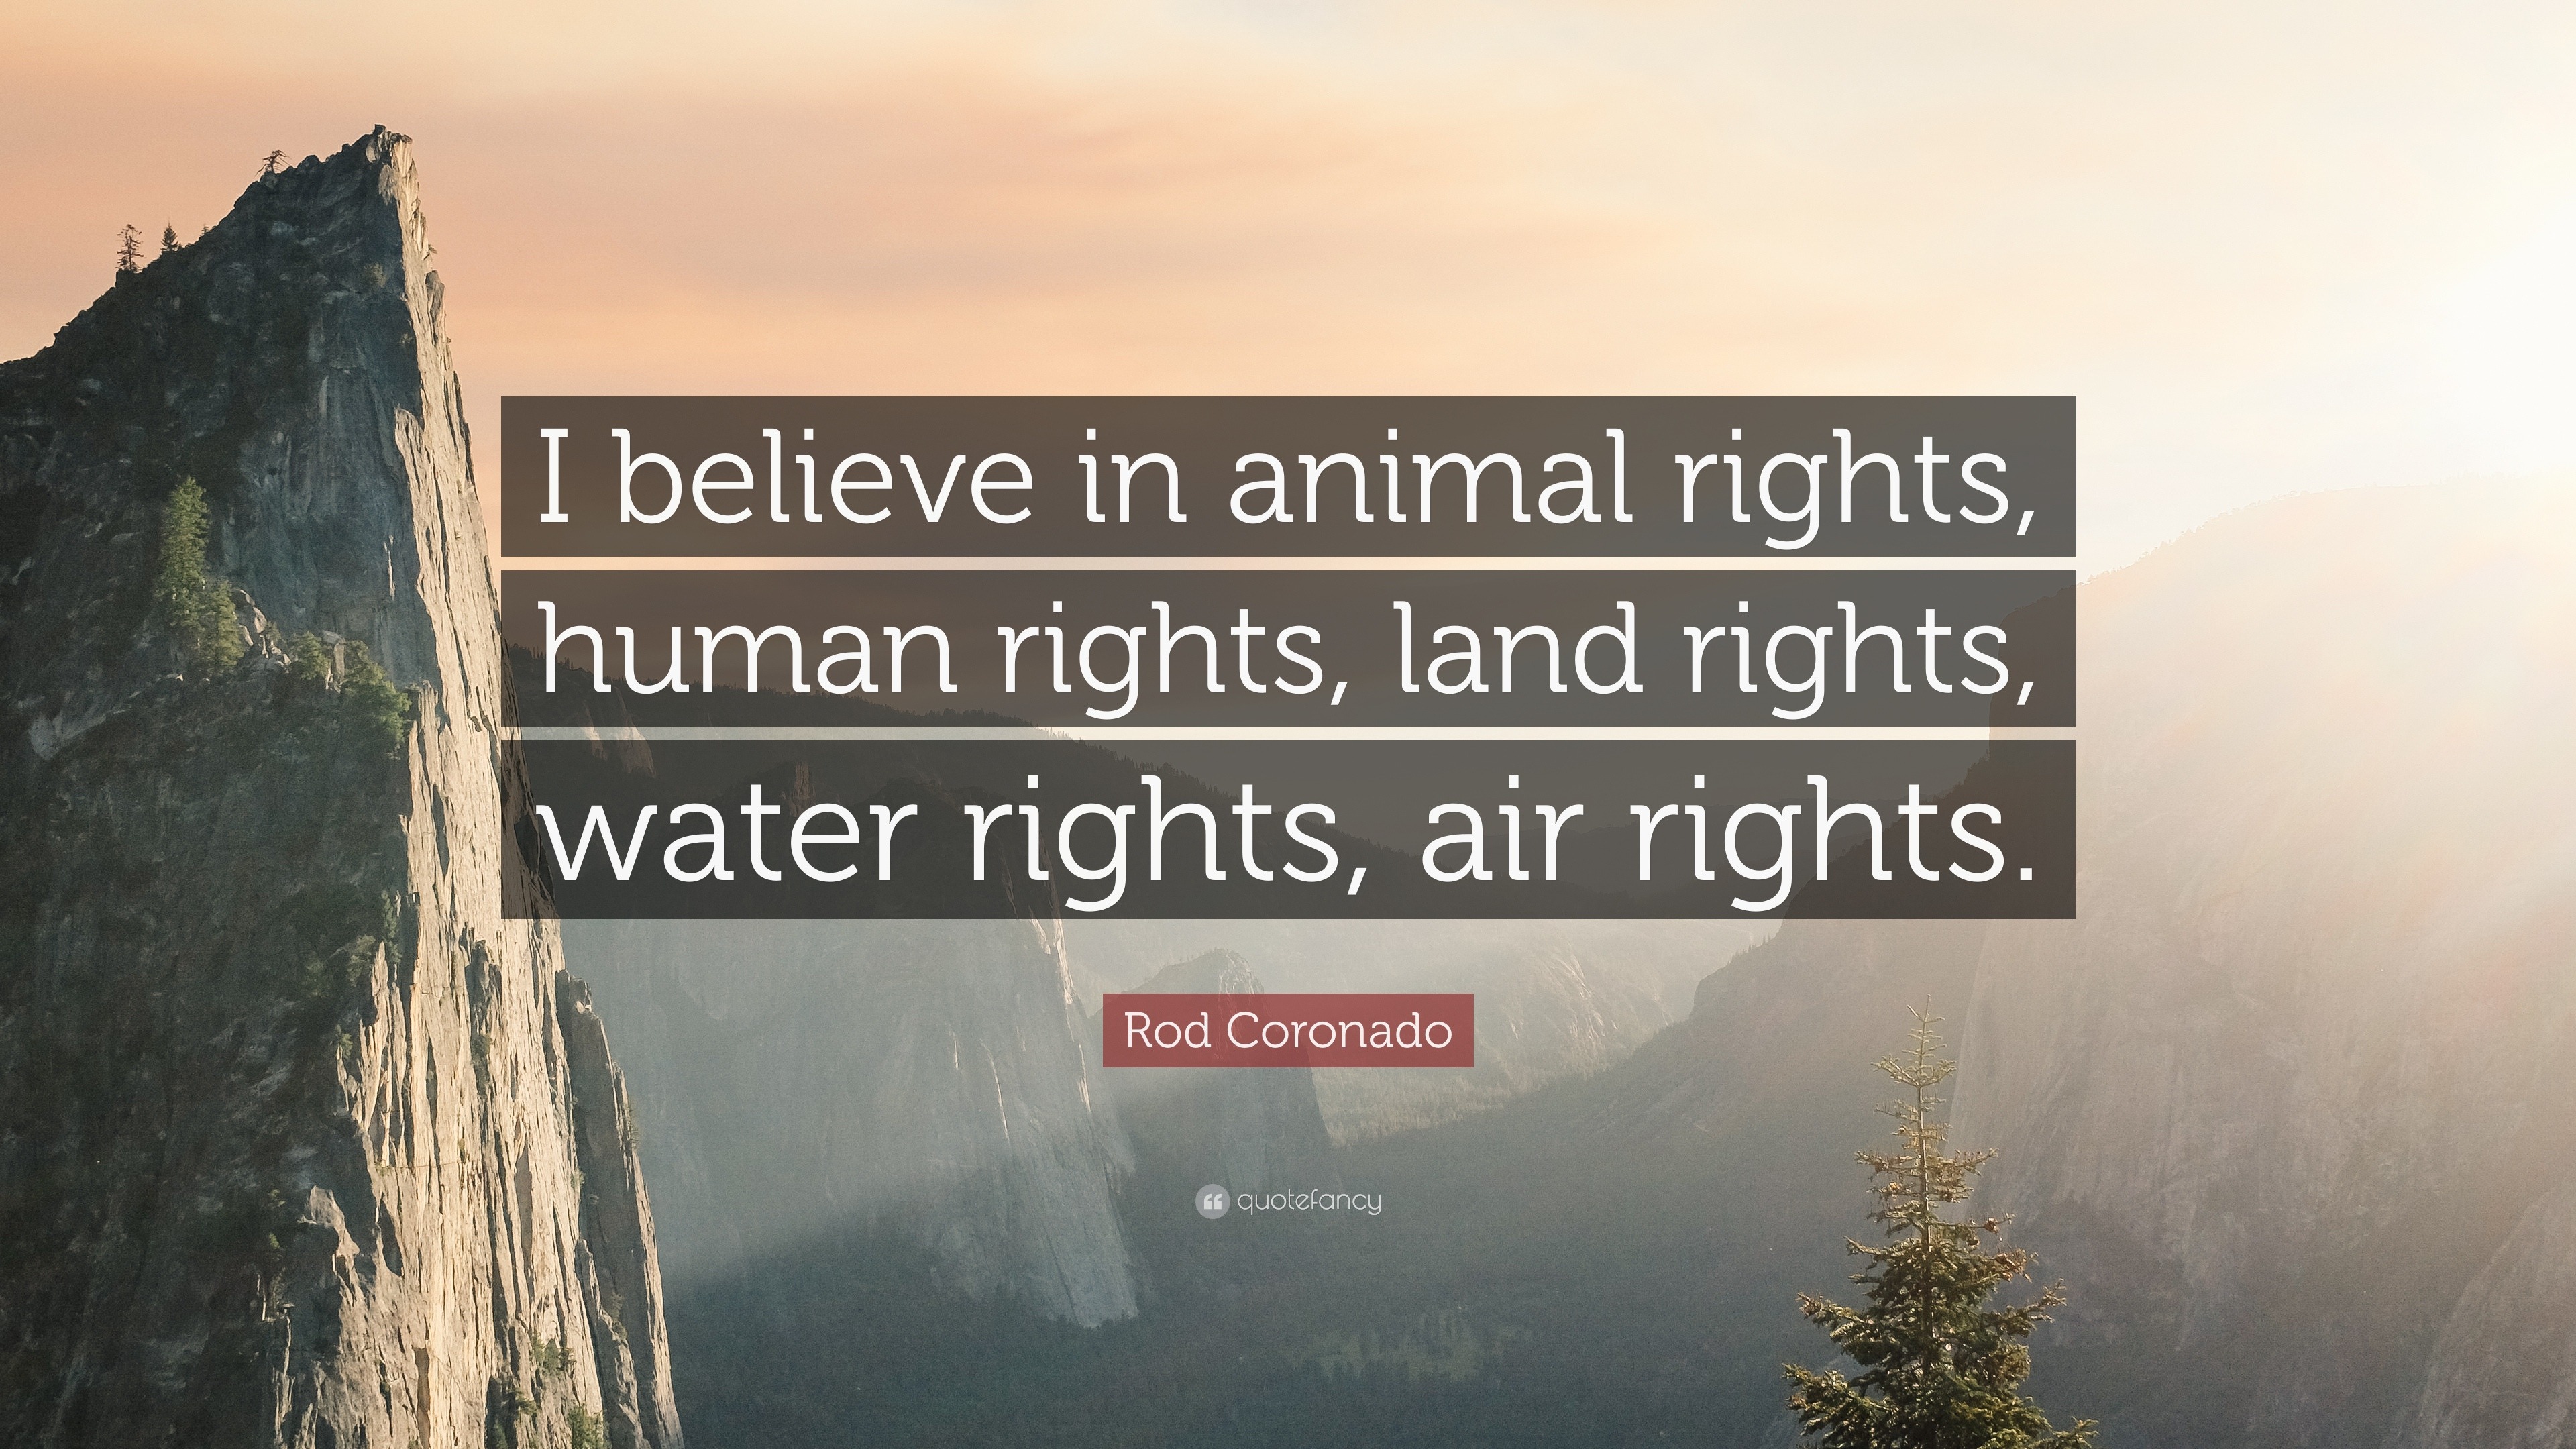 Rod Coronado Quote: “I believe in animal rights, human rights, land rights,  water rights, air rights.”